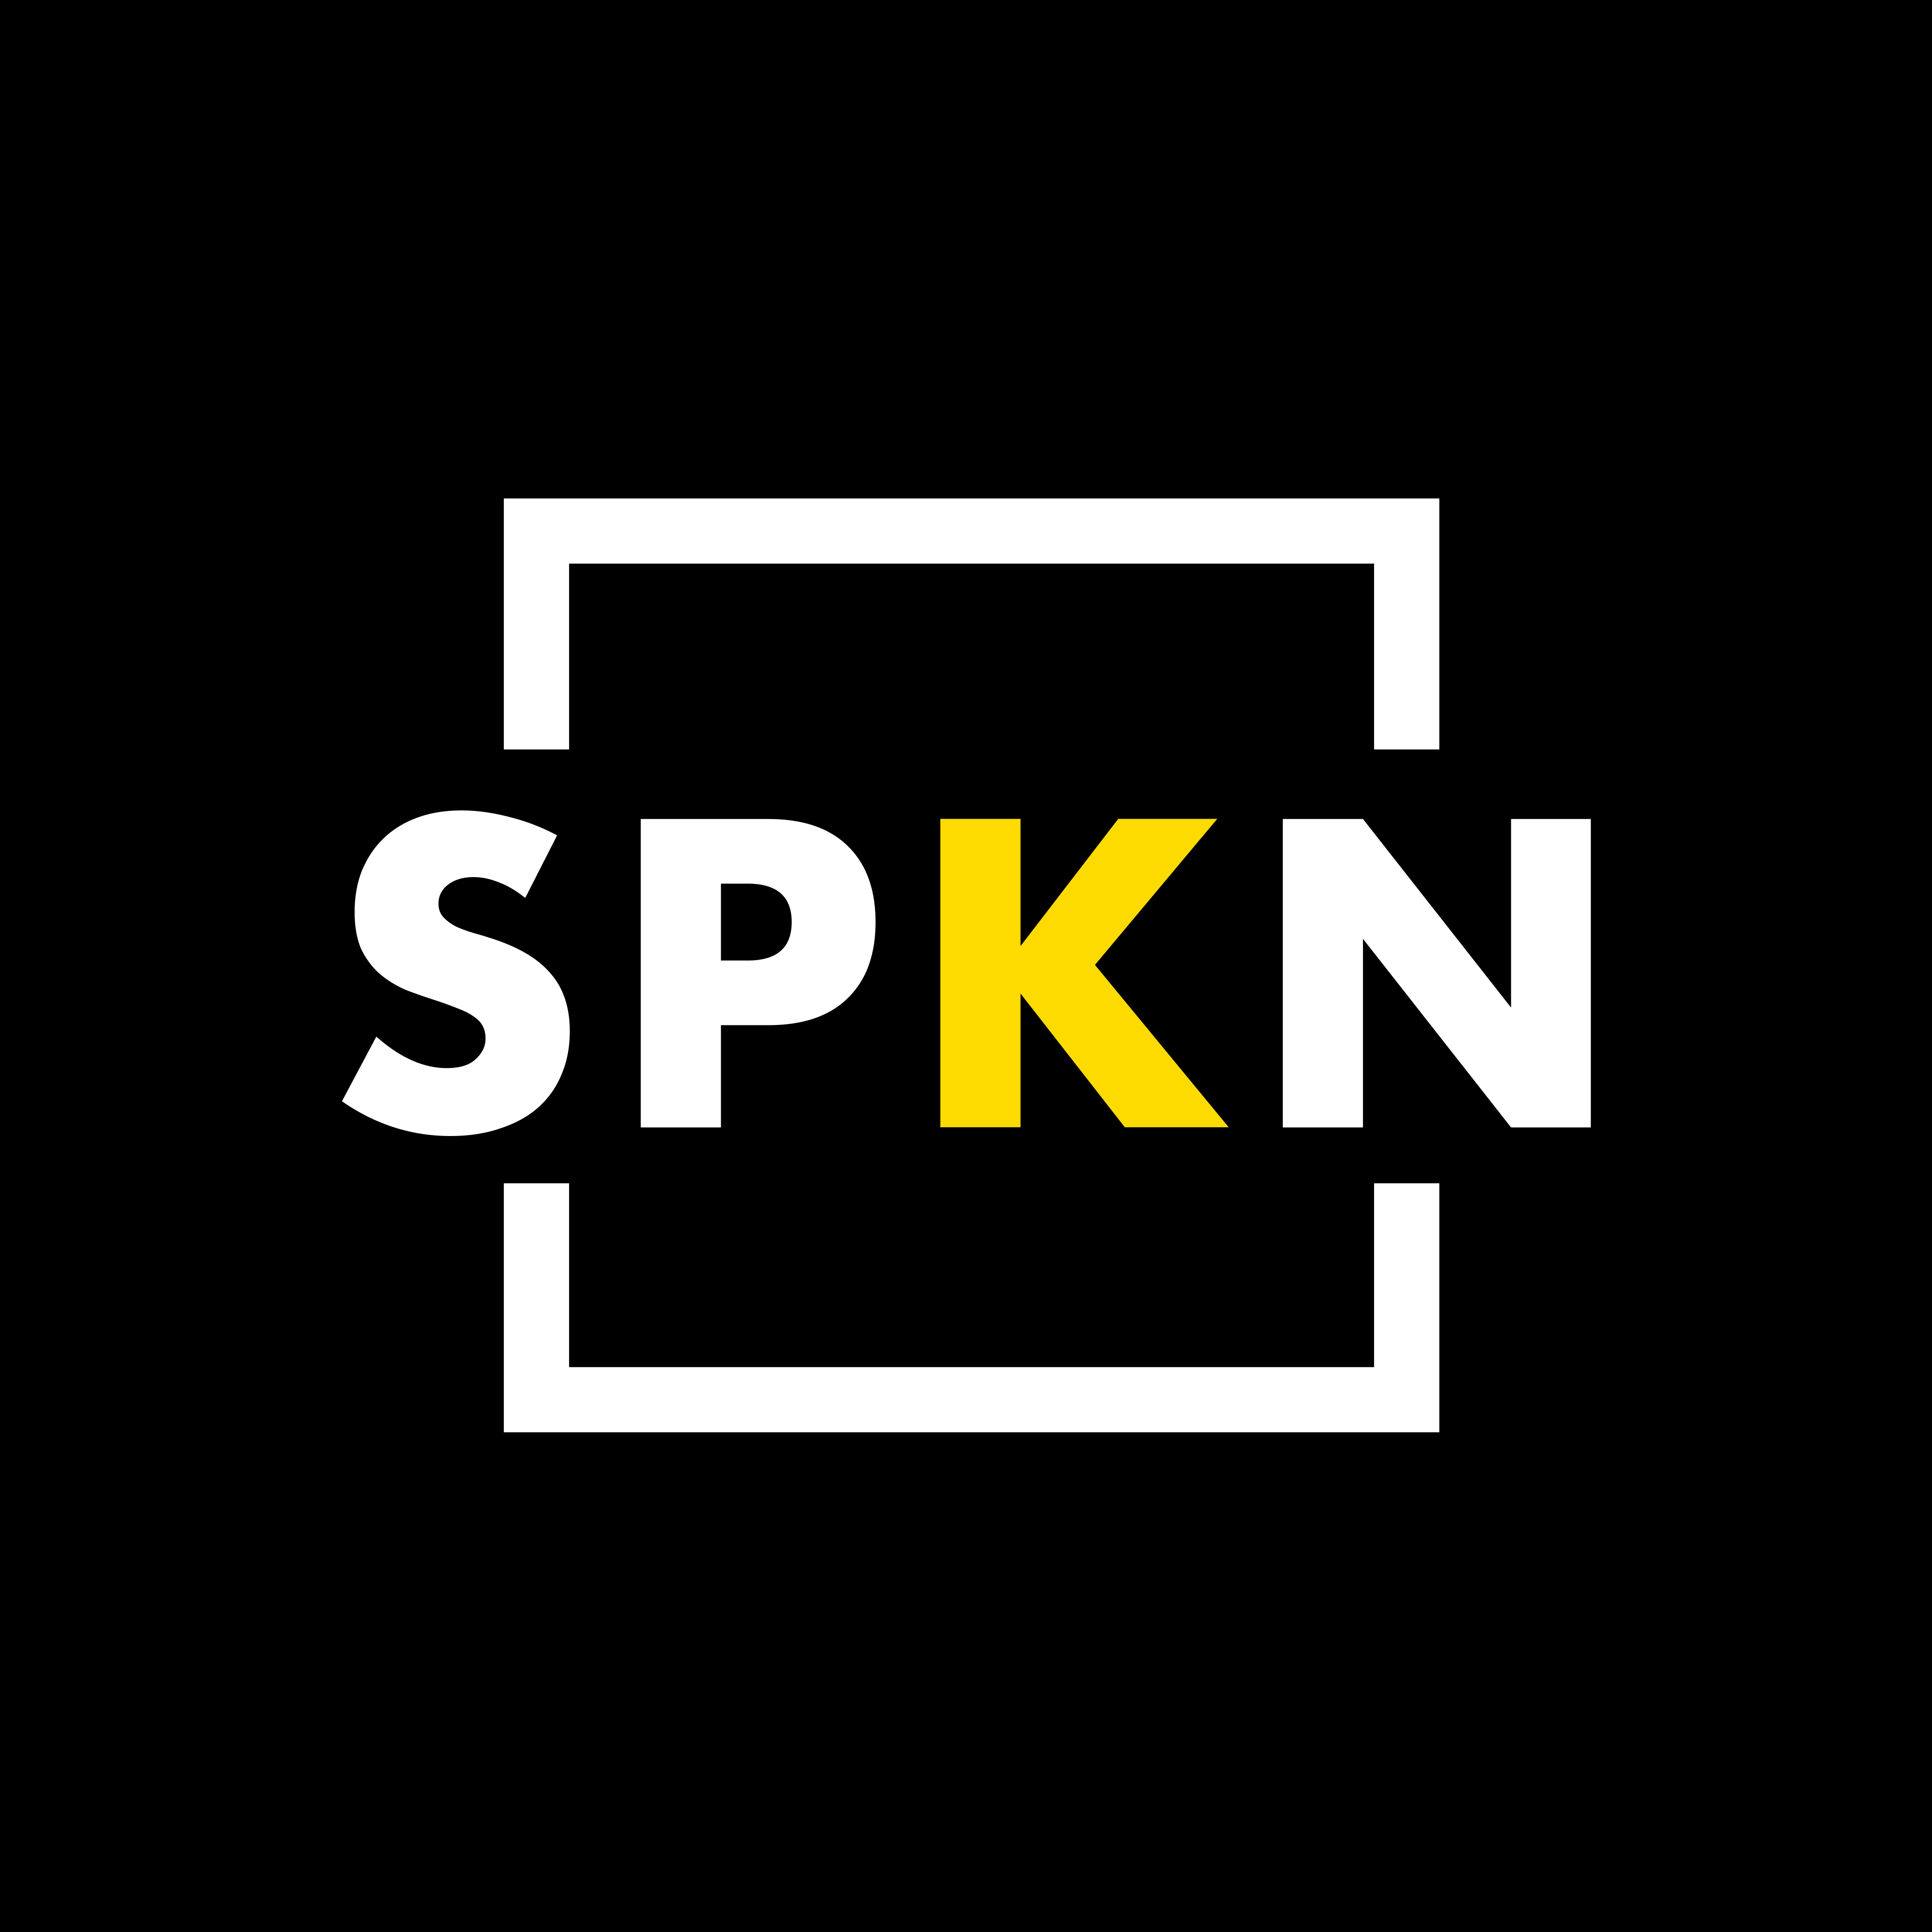 SPKN - Sport Professional knowledge Network